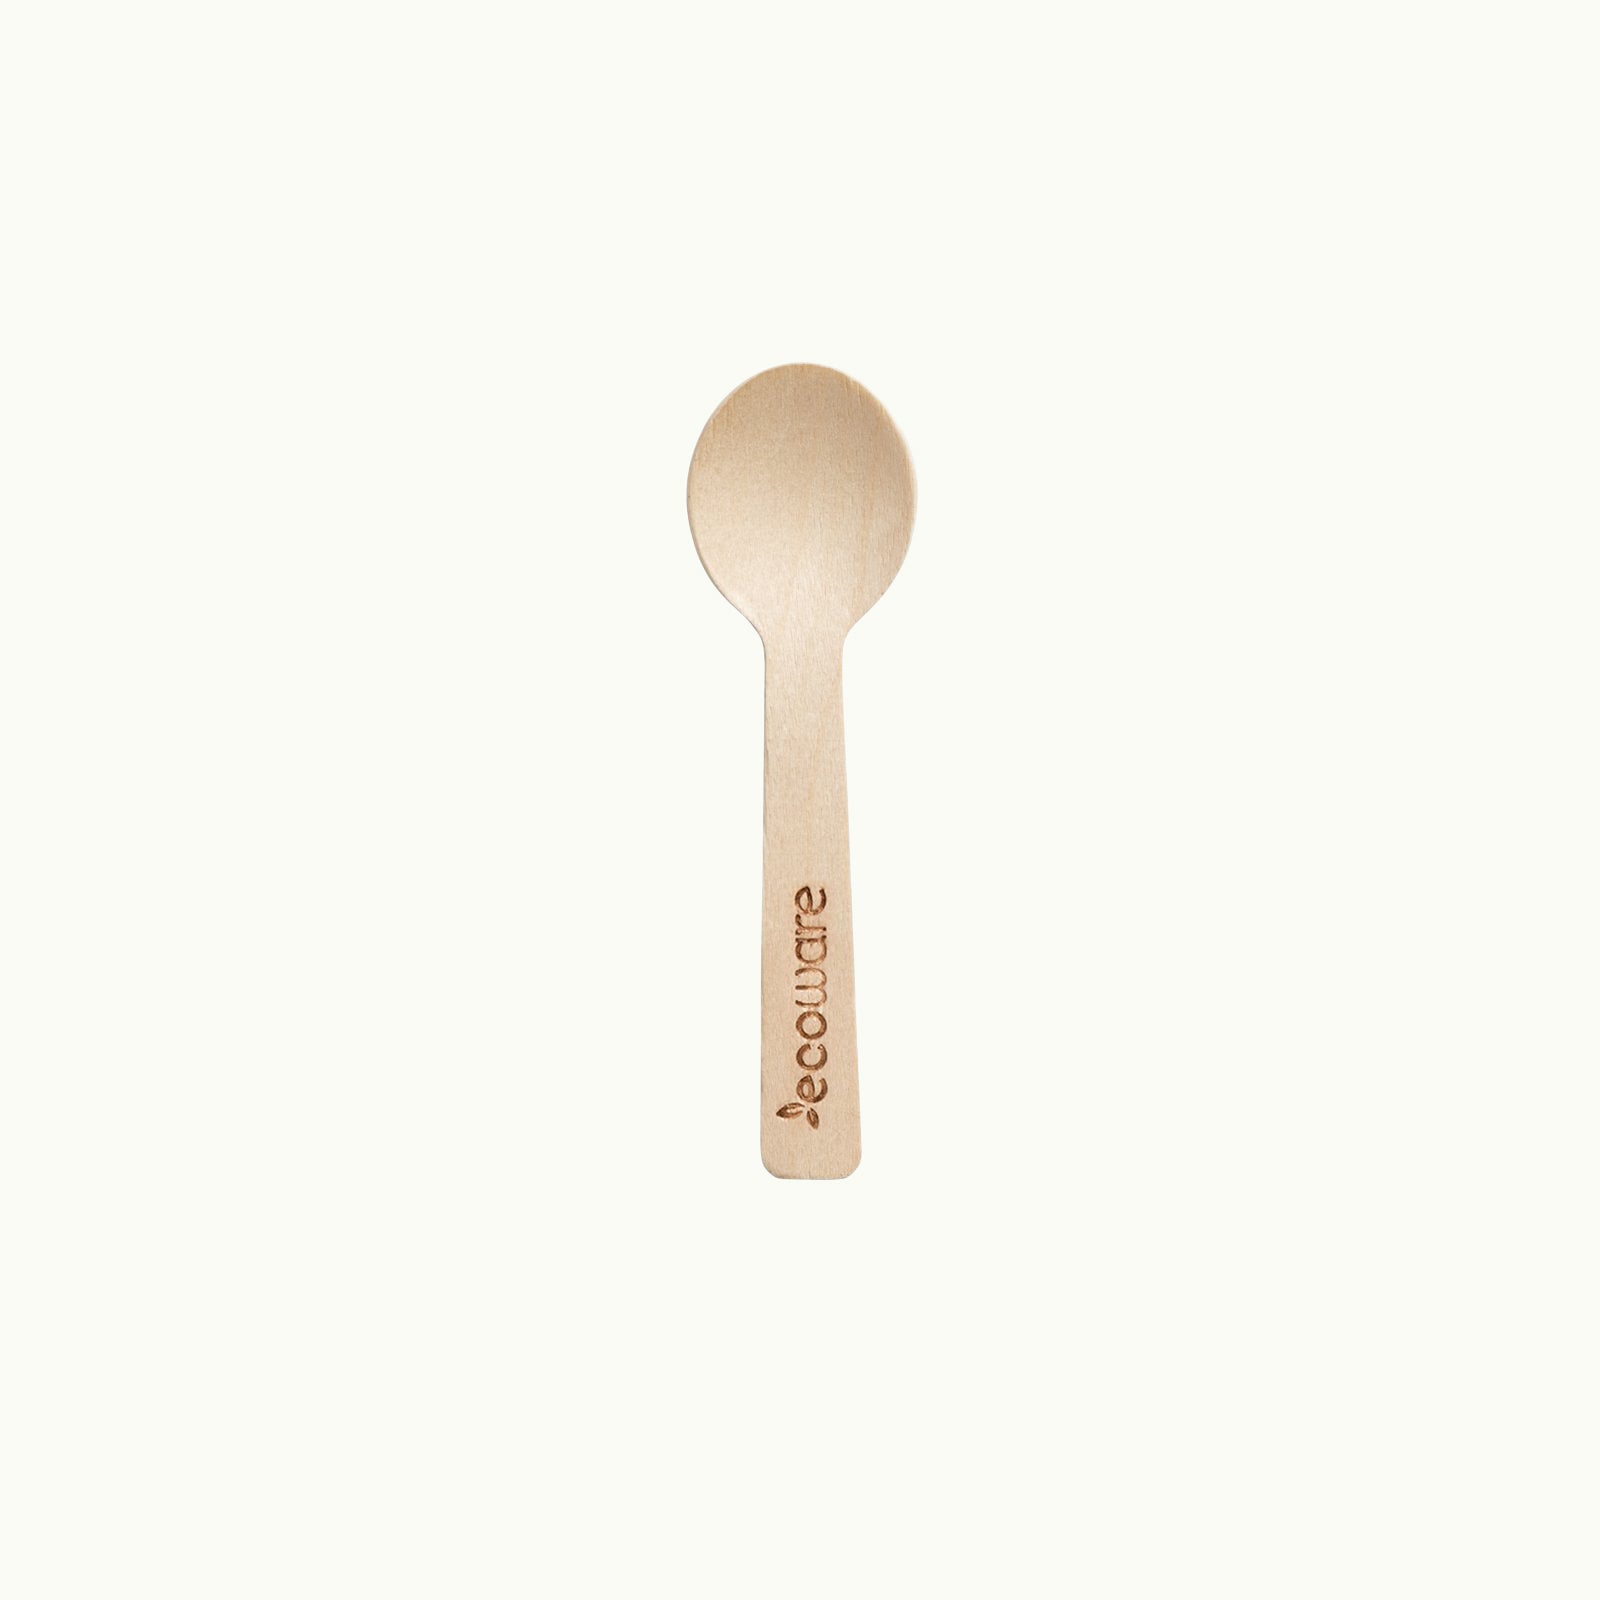 Certified compostable wooden cutlery tea spoon.